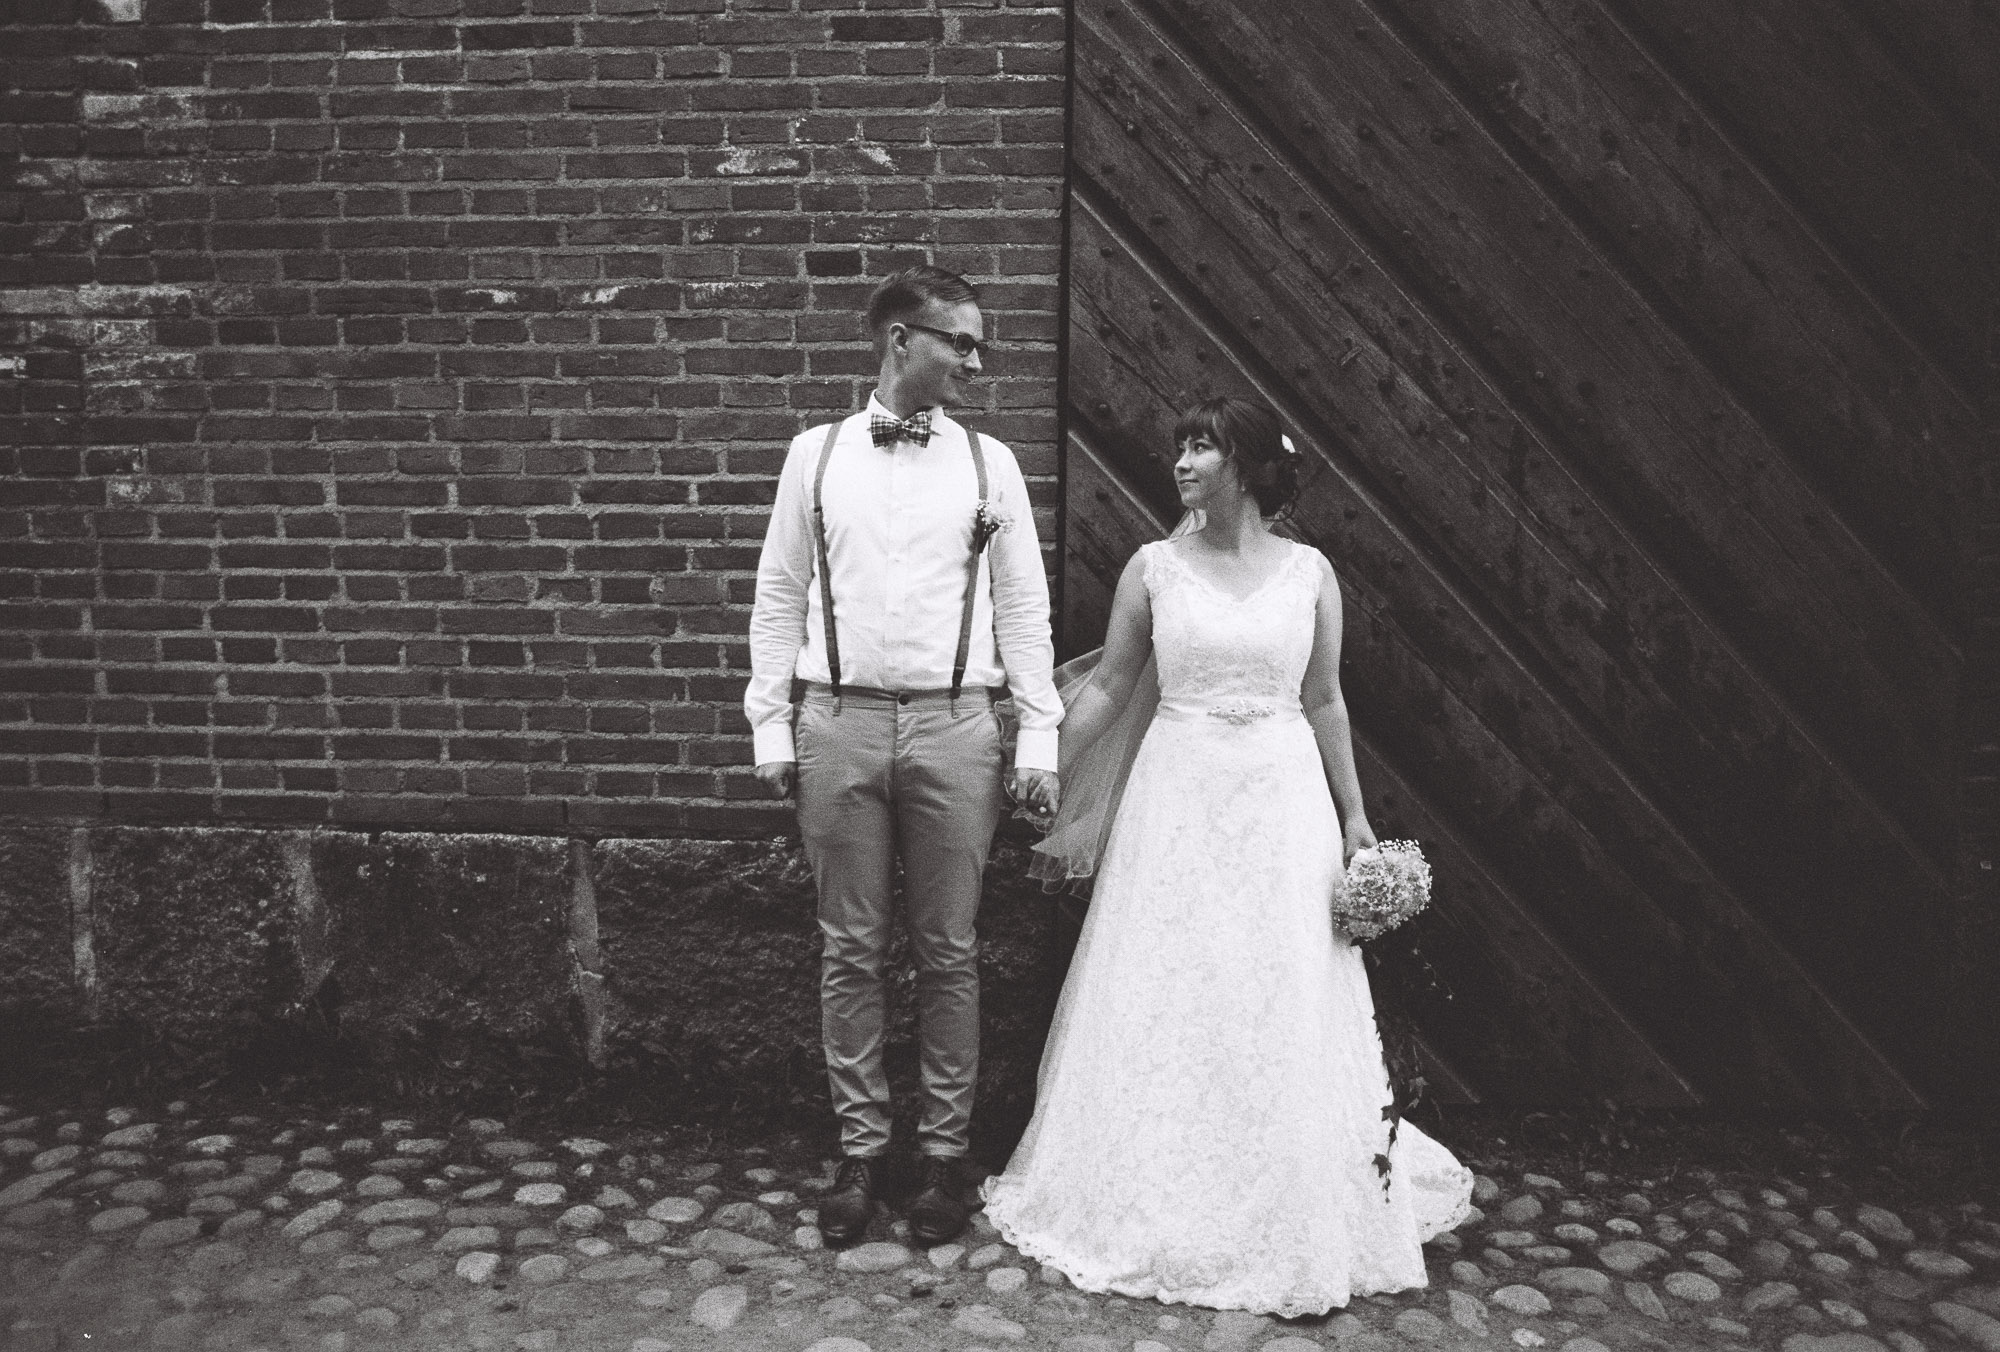 jere-satamo-analog-film-wedding-photographer-finland-167.jpg